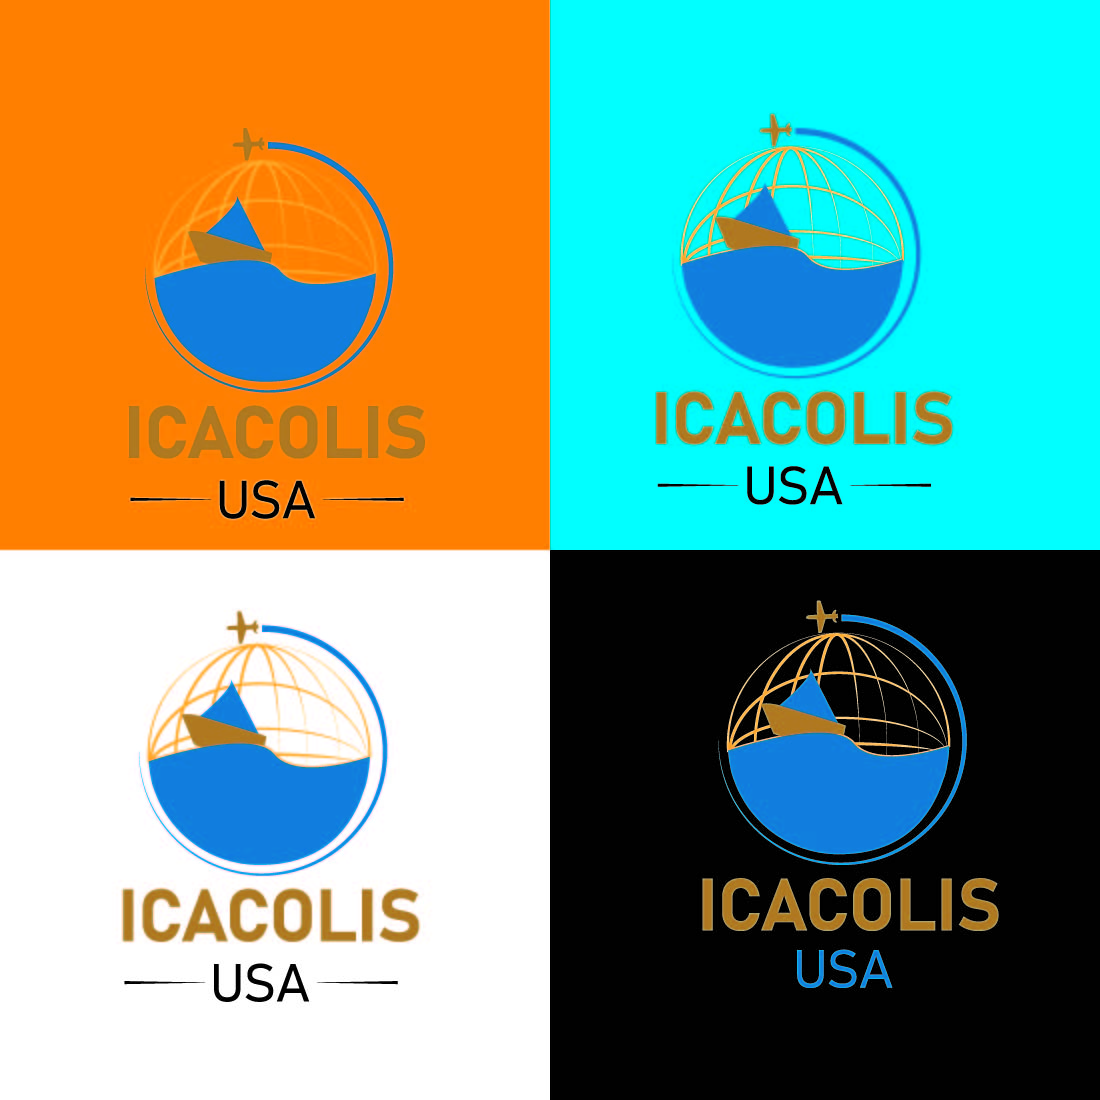 ICACOLIS USA LOGO preview image.